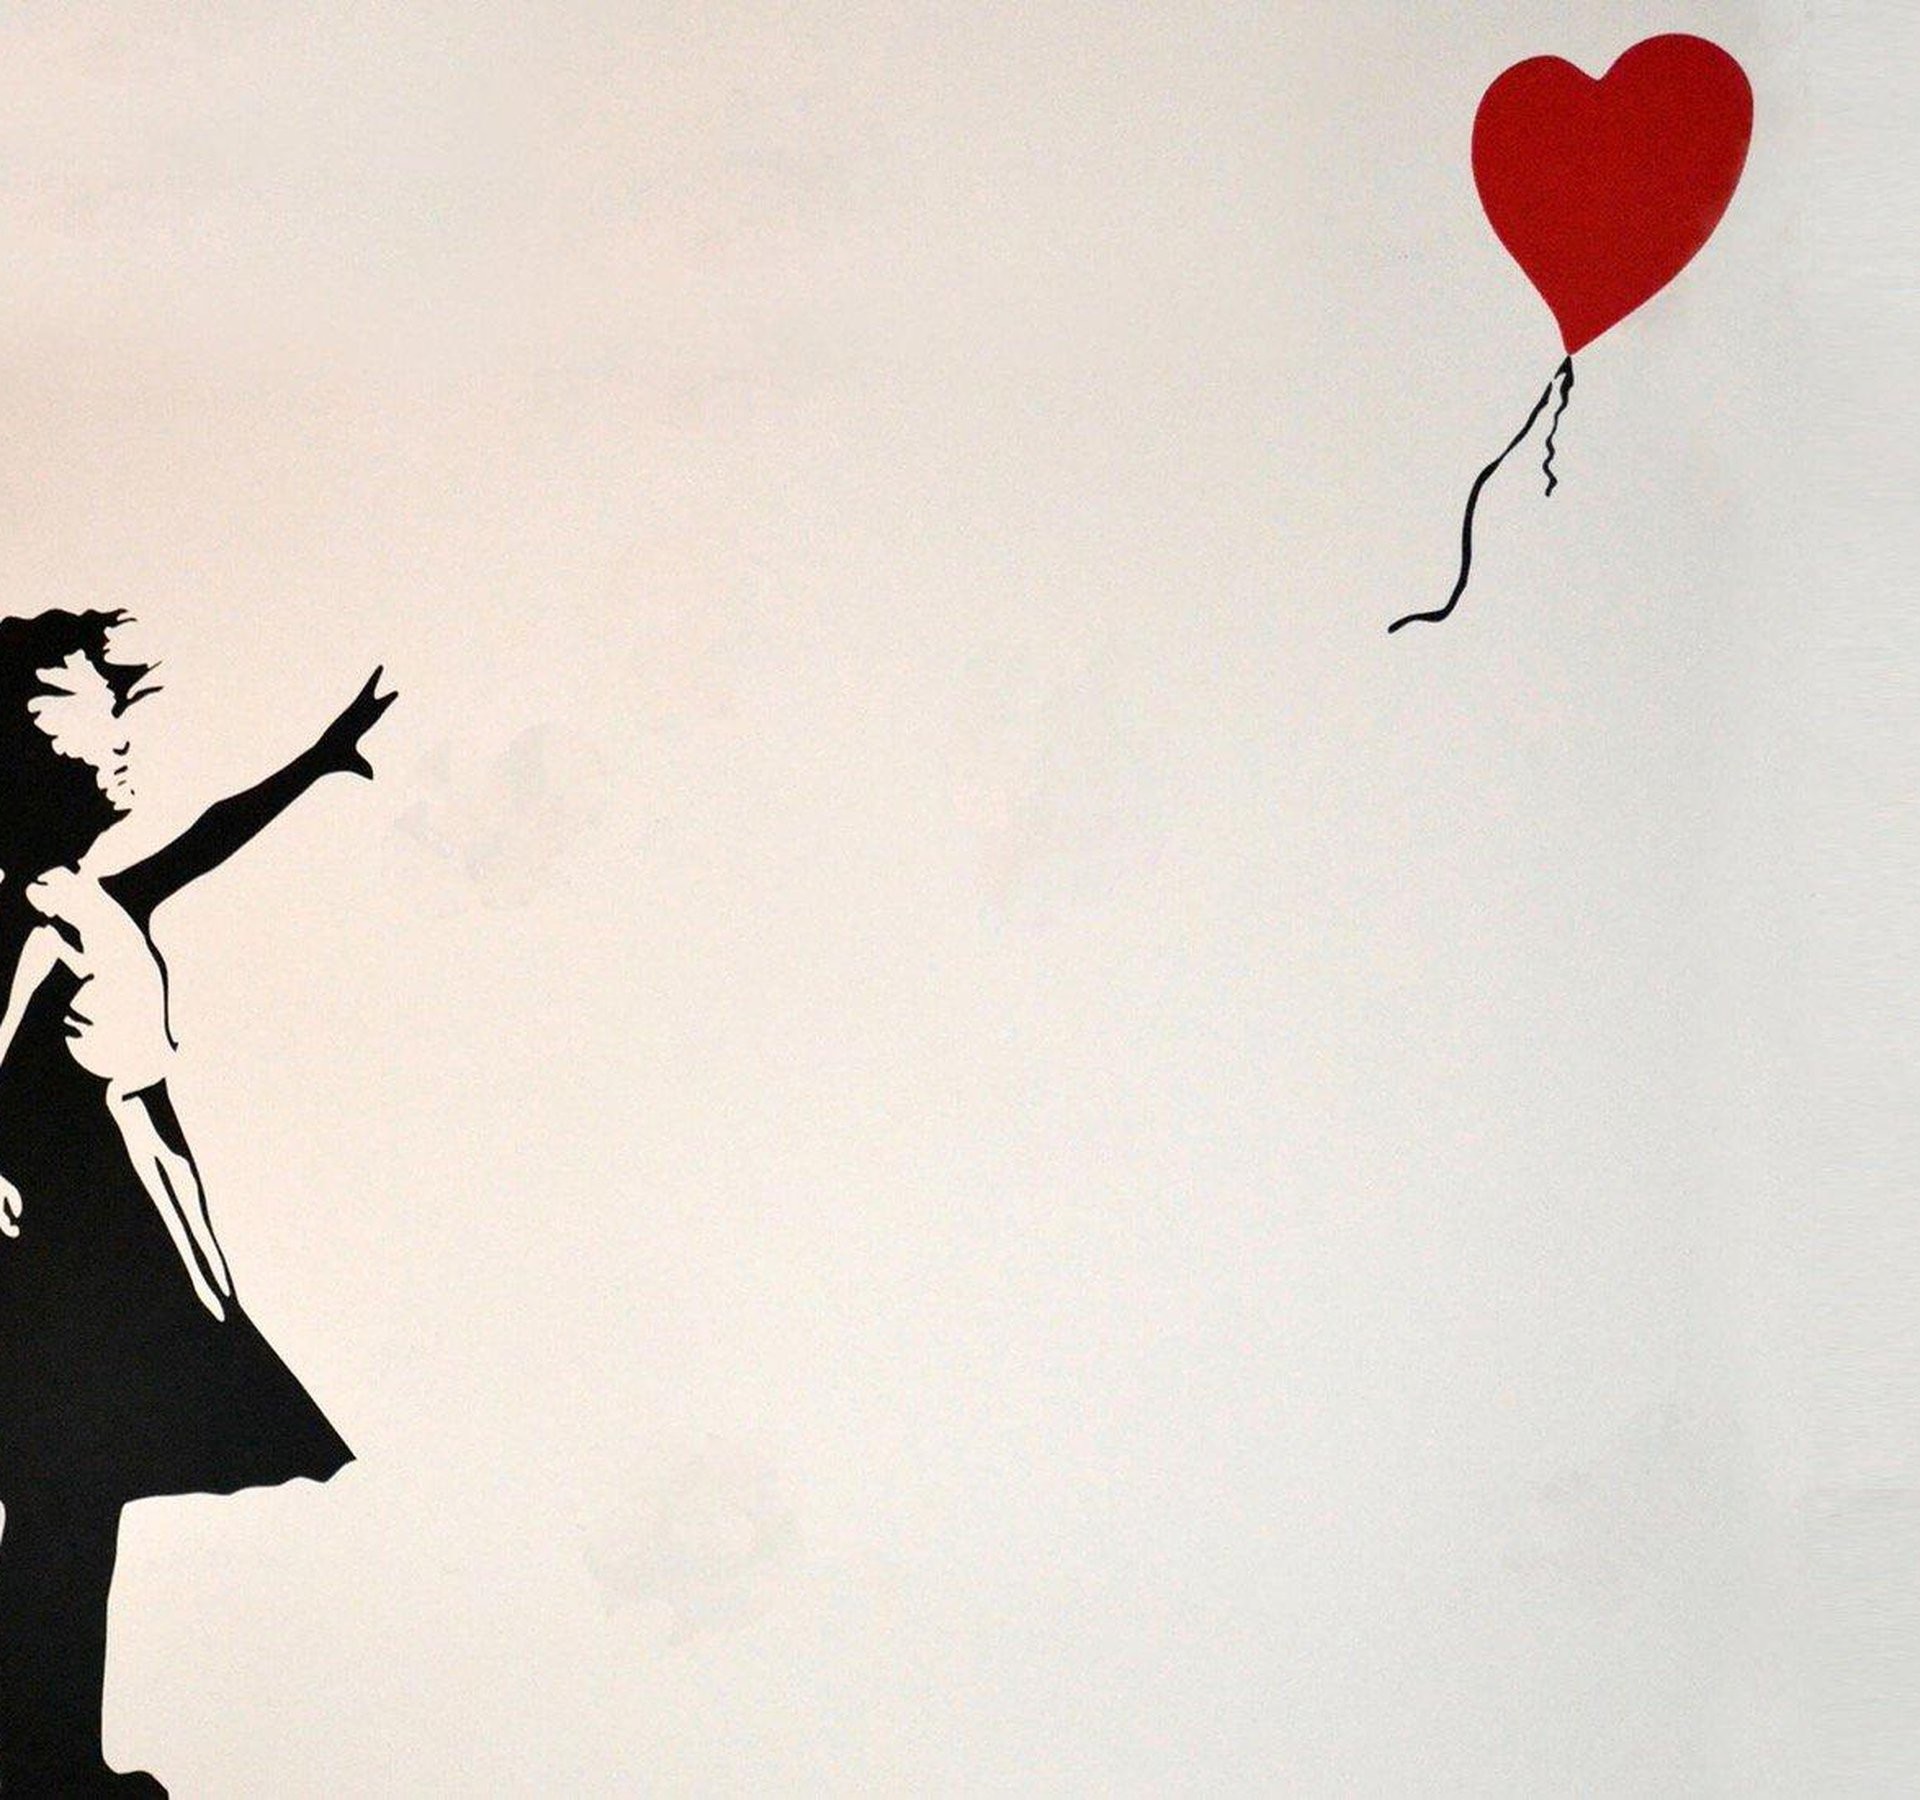 1920x1800 Download ballon girl banksy for wallpaper grafitti wallpaper for phone  desktop backgrounds collections jpg  Banksy